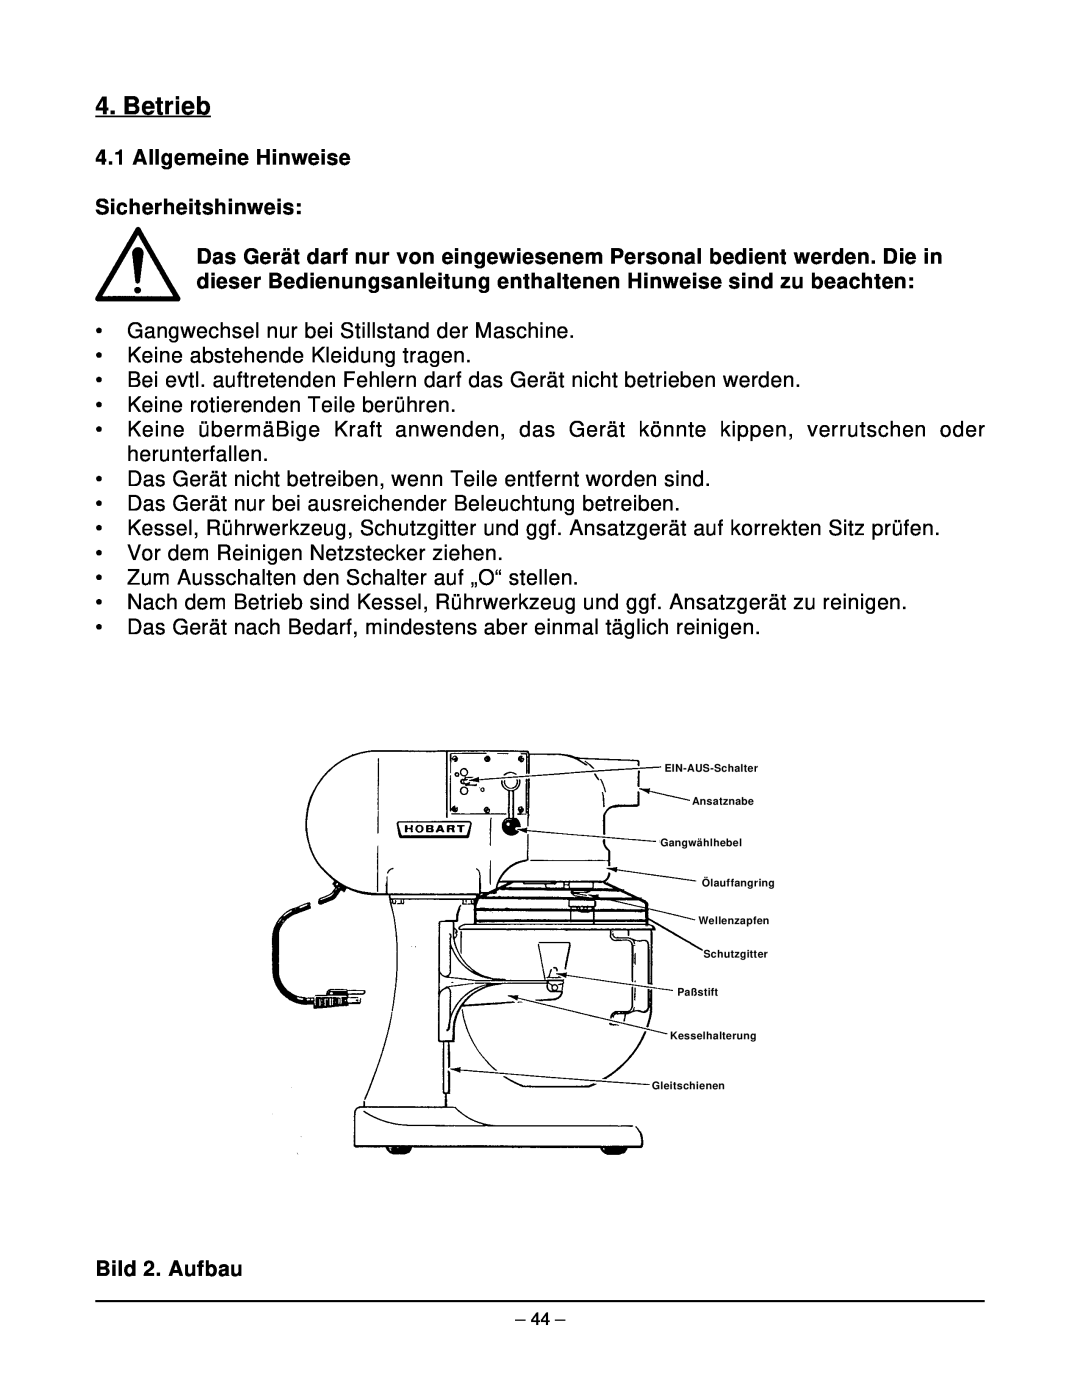 Hobart N50 MIXER manual Betrieb, 4.1Allgemeine Hinweise Sicherheitshinweis, Bild 2. Aufbau 